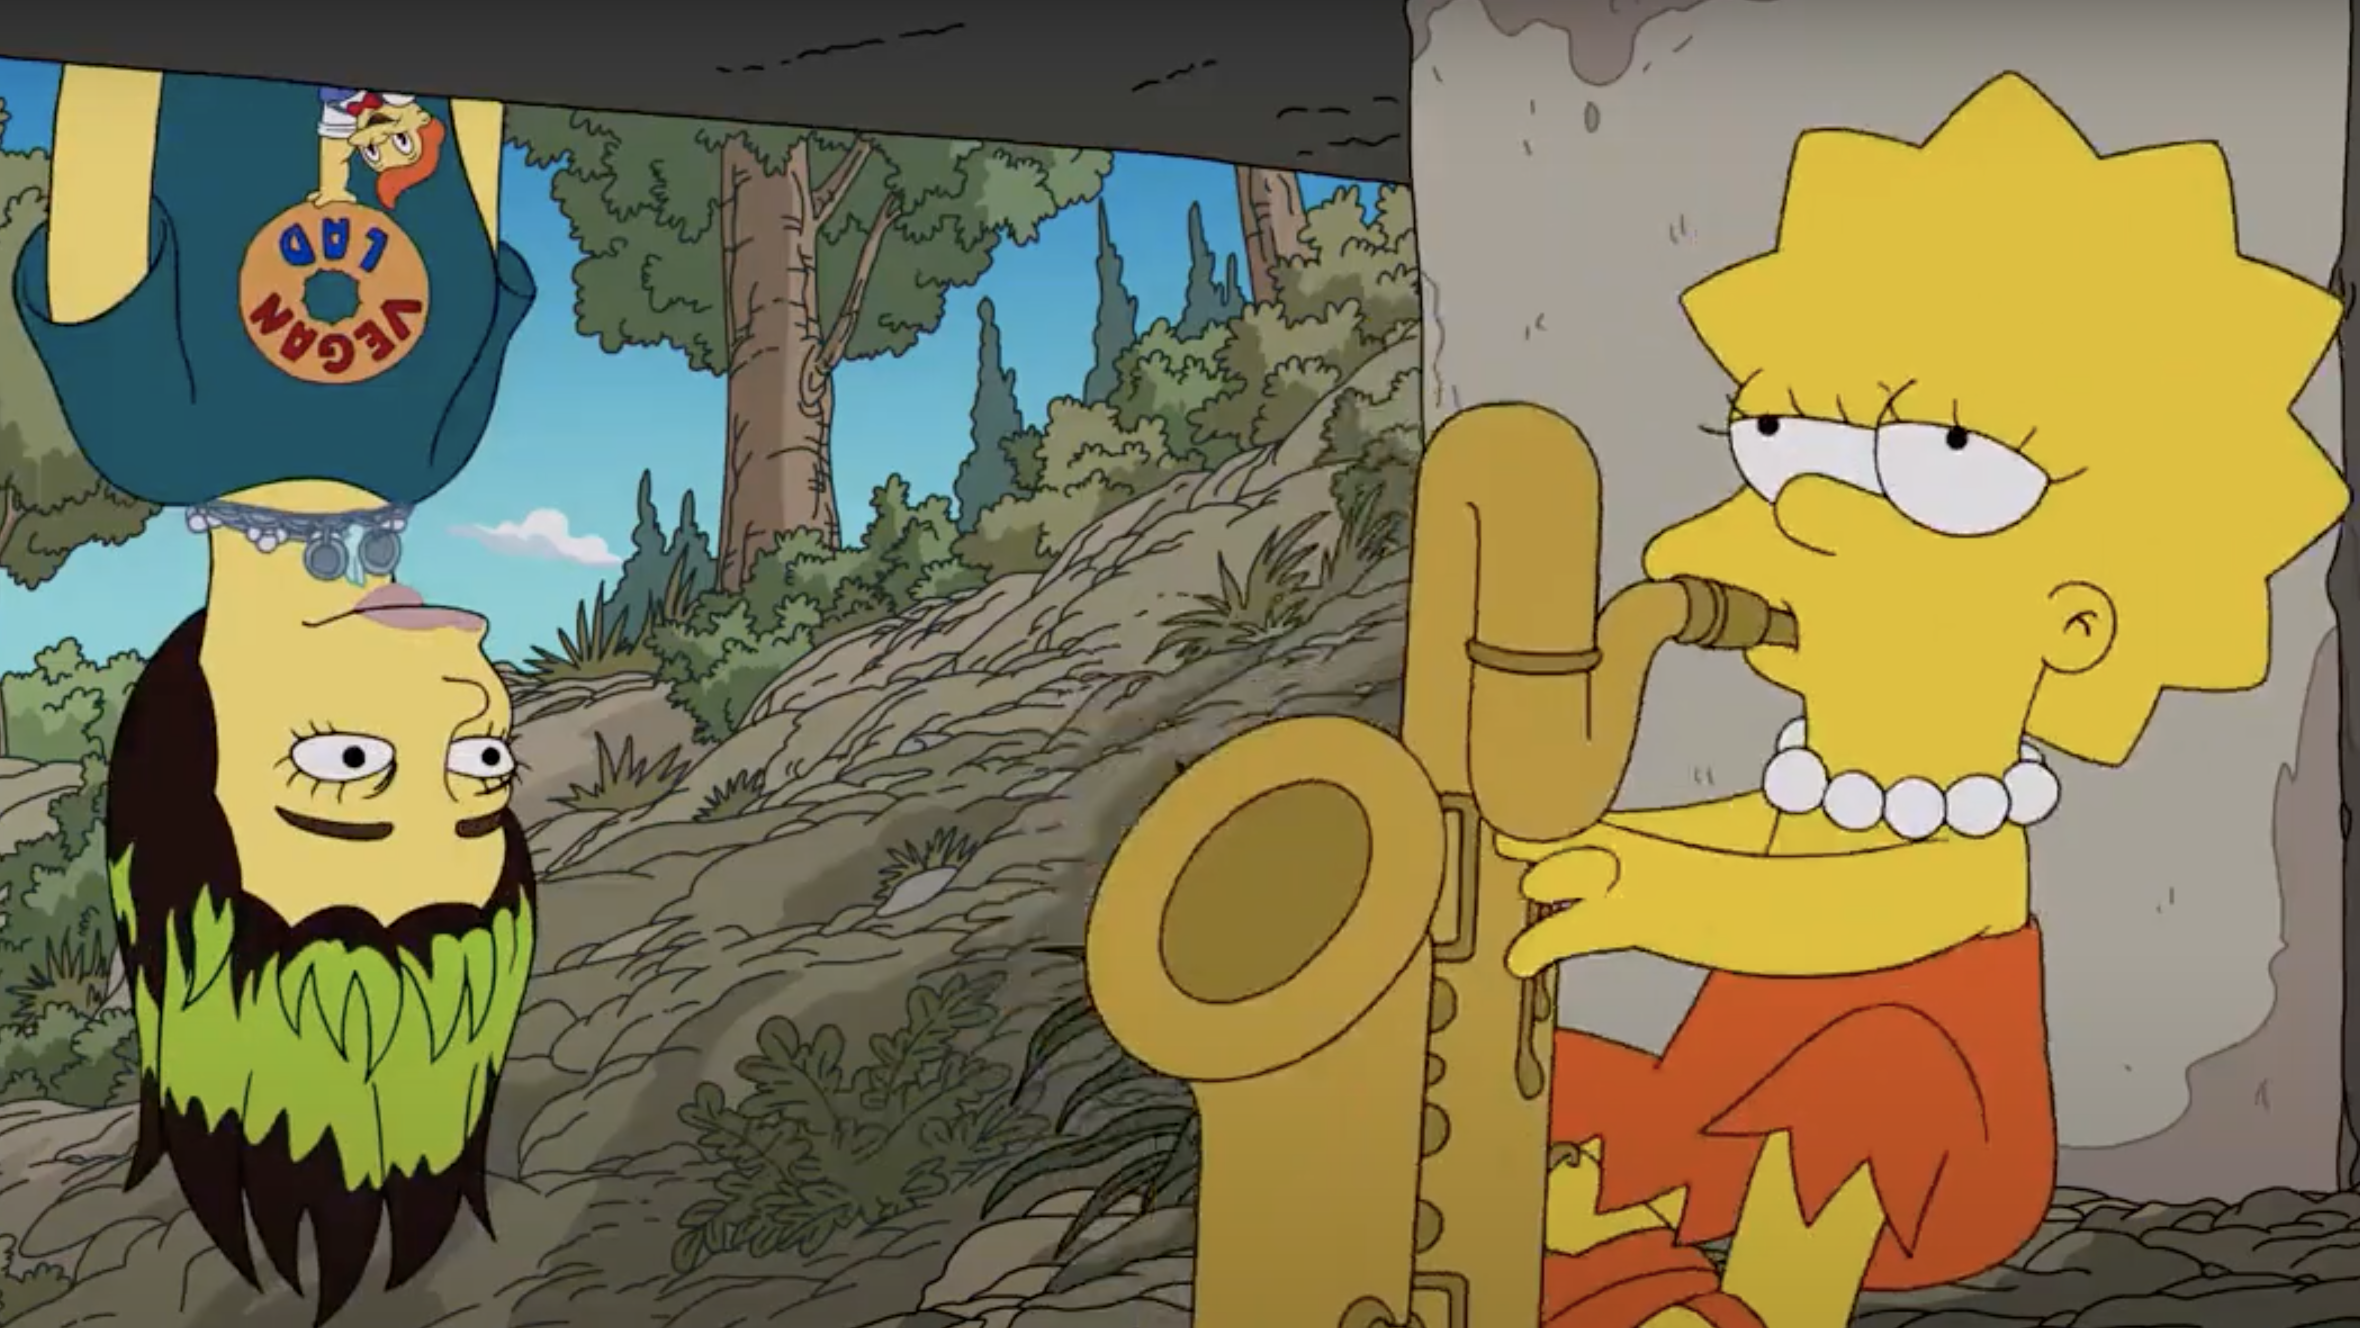 Billie Eilish asks Lisa Simpson to “jam” in new Simpsons short film